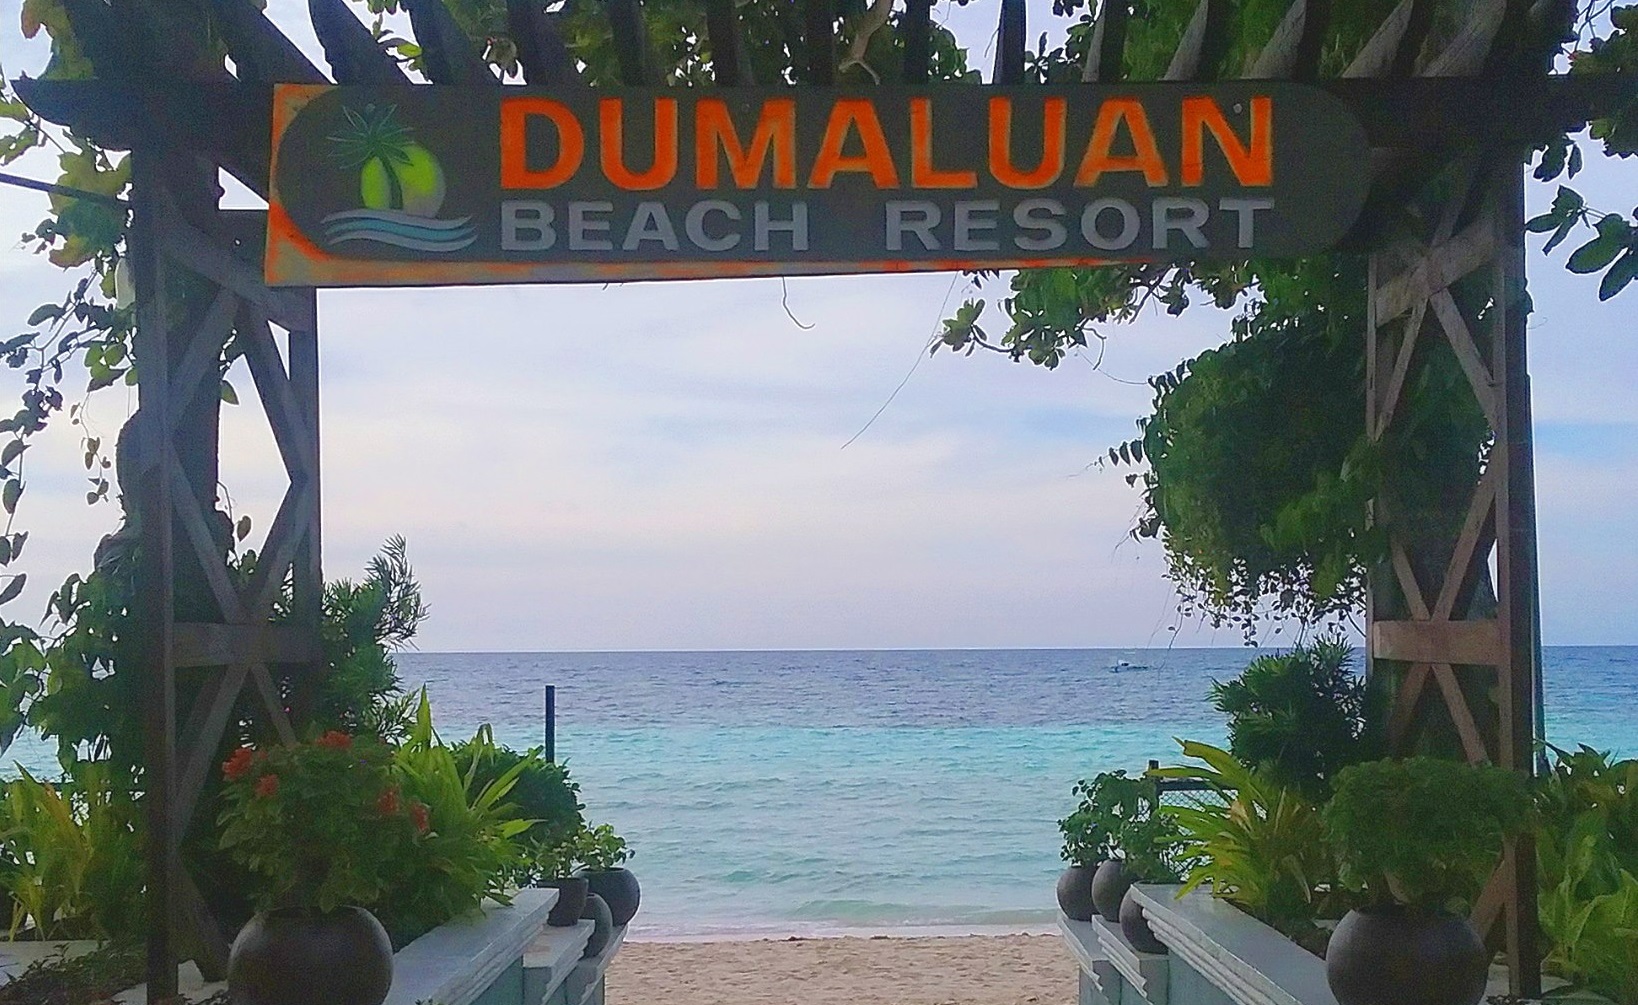 Dumaluan beach resort